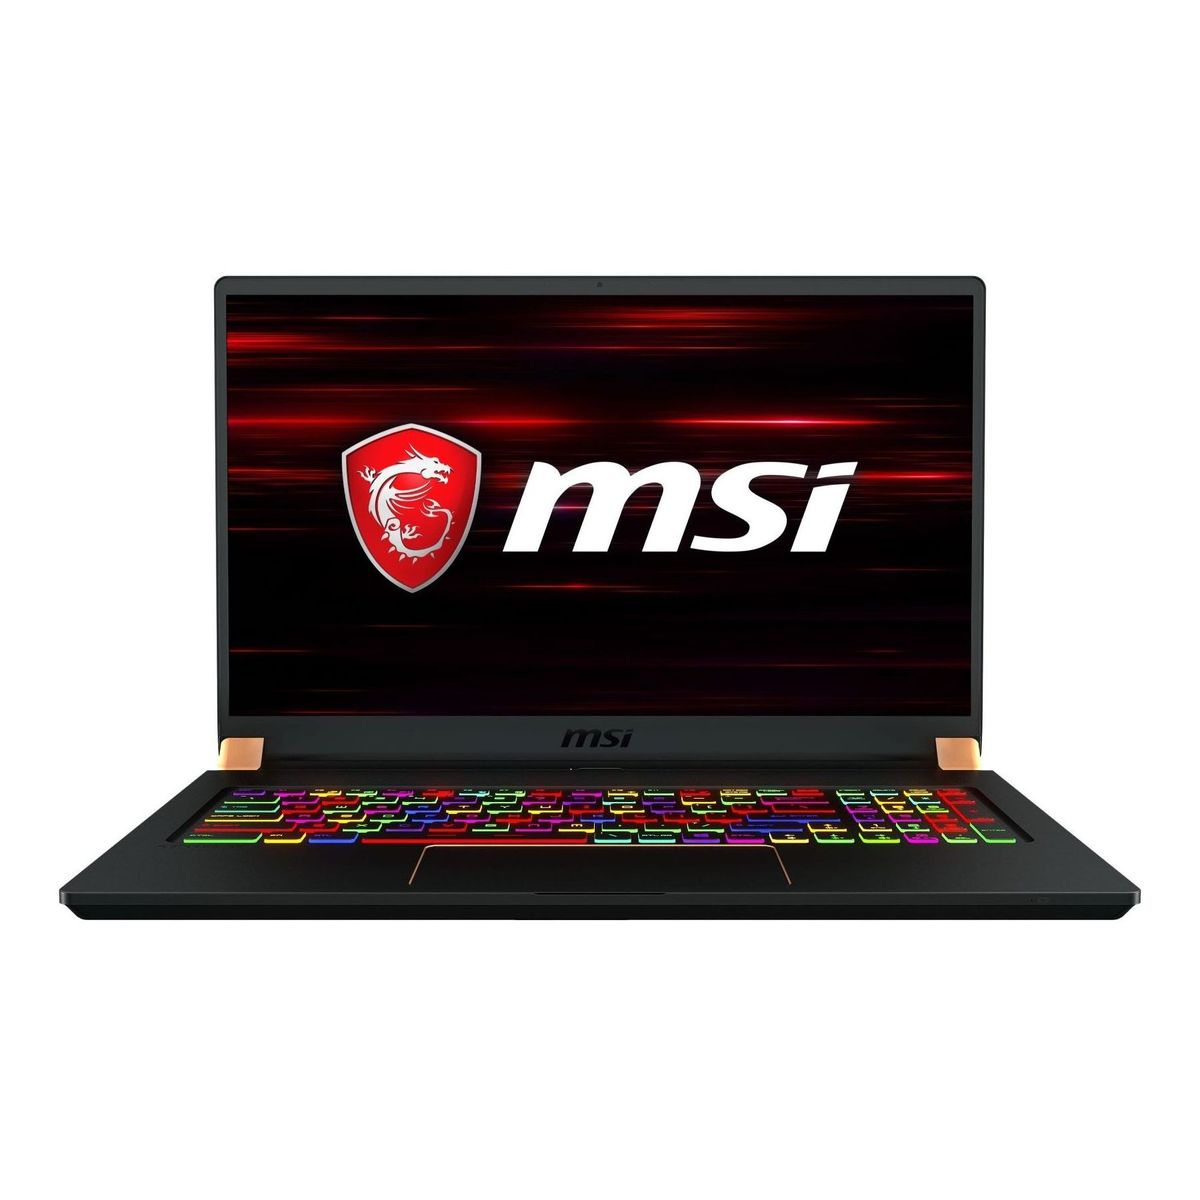 MSI GS75 Stealth 9SG Gaming Laptop i7-9750H 2.6GHz/32GB/2TB SSD/GeForce RTX 2080 8GB/Windows 10/Black